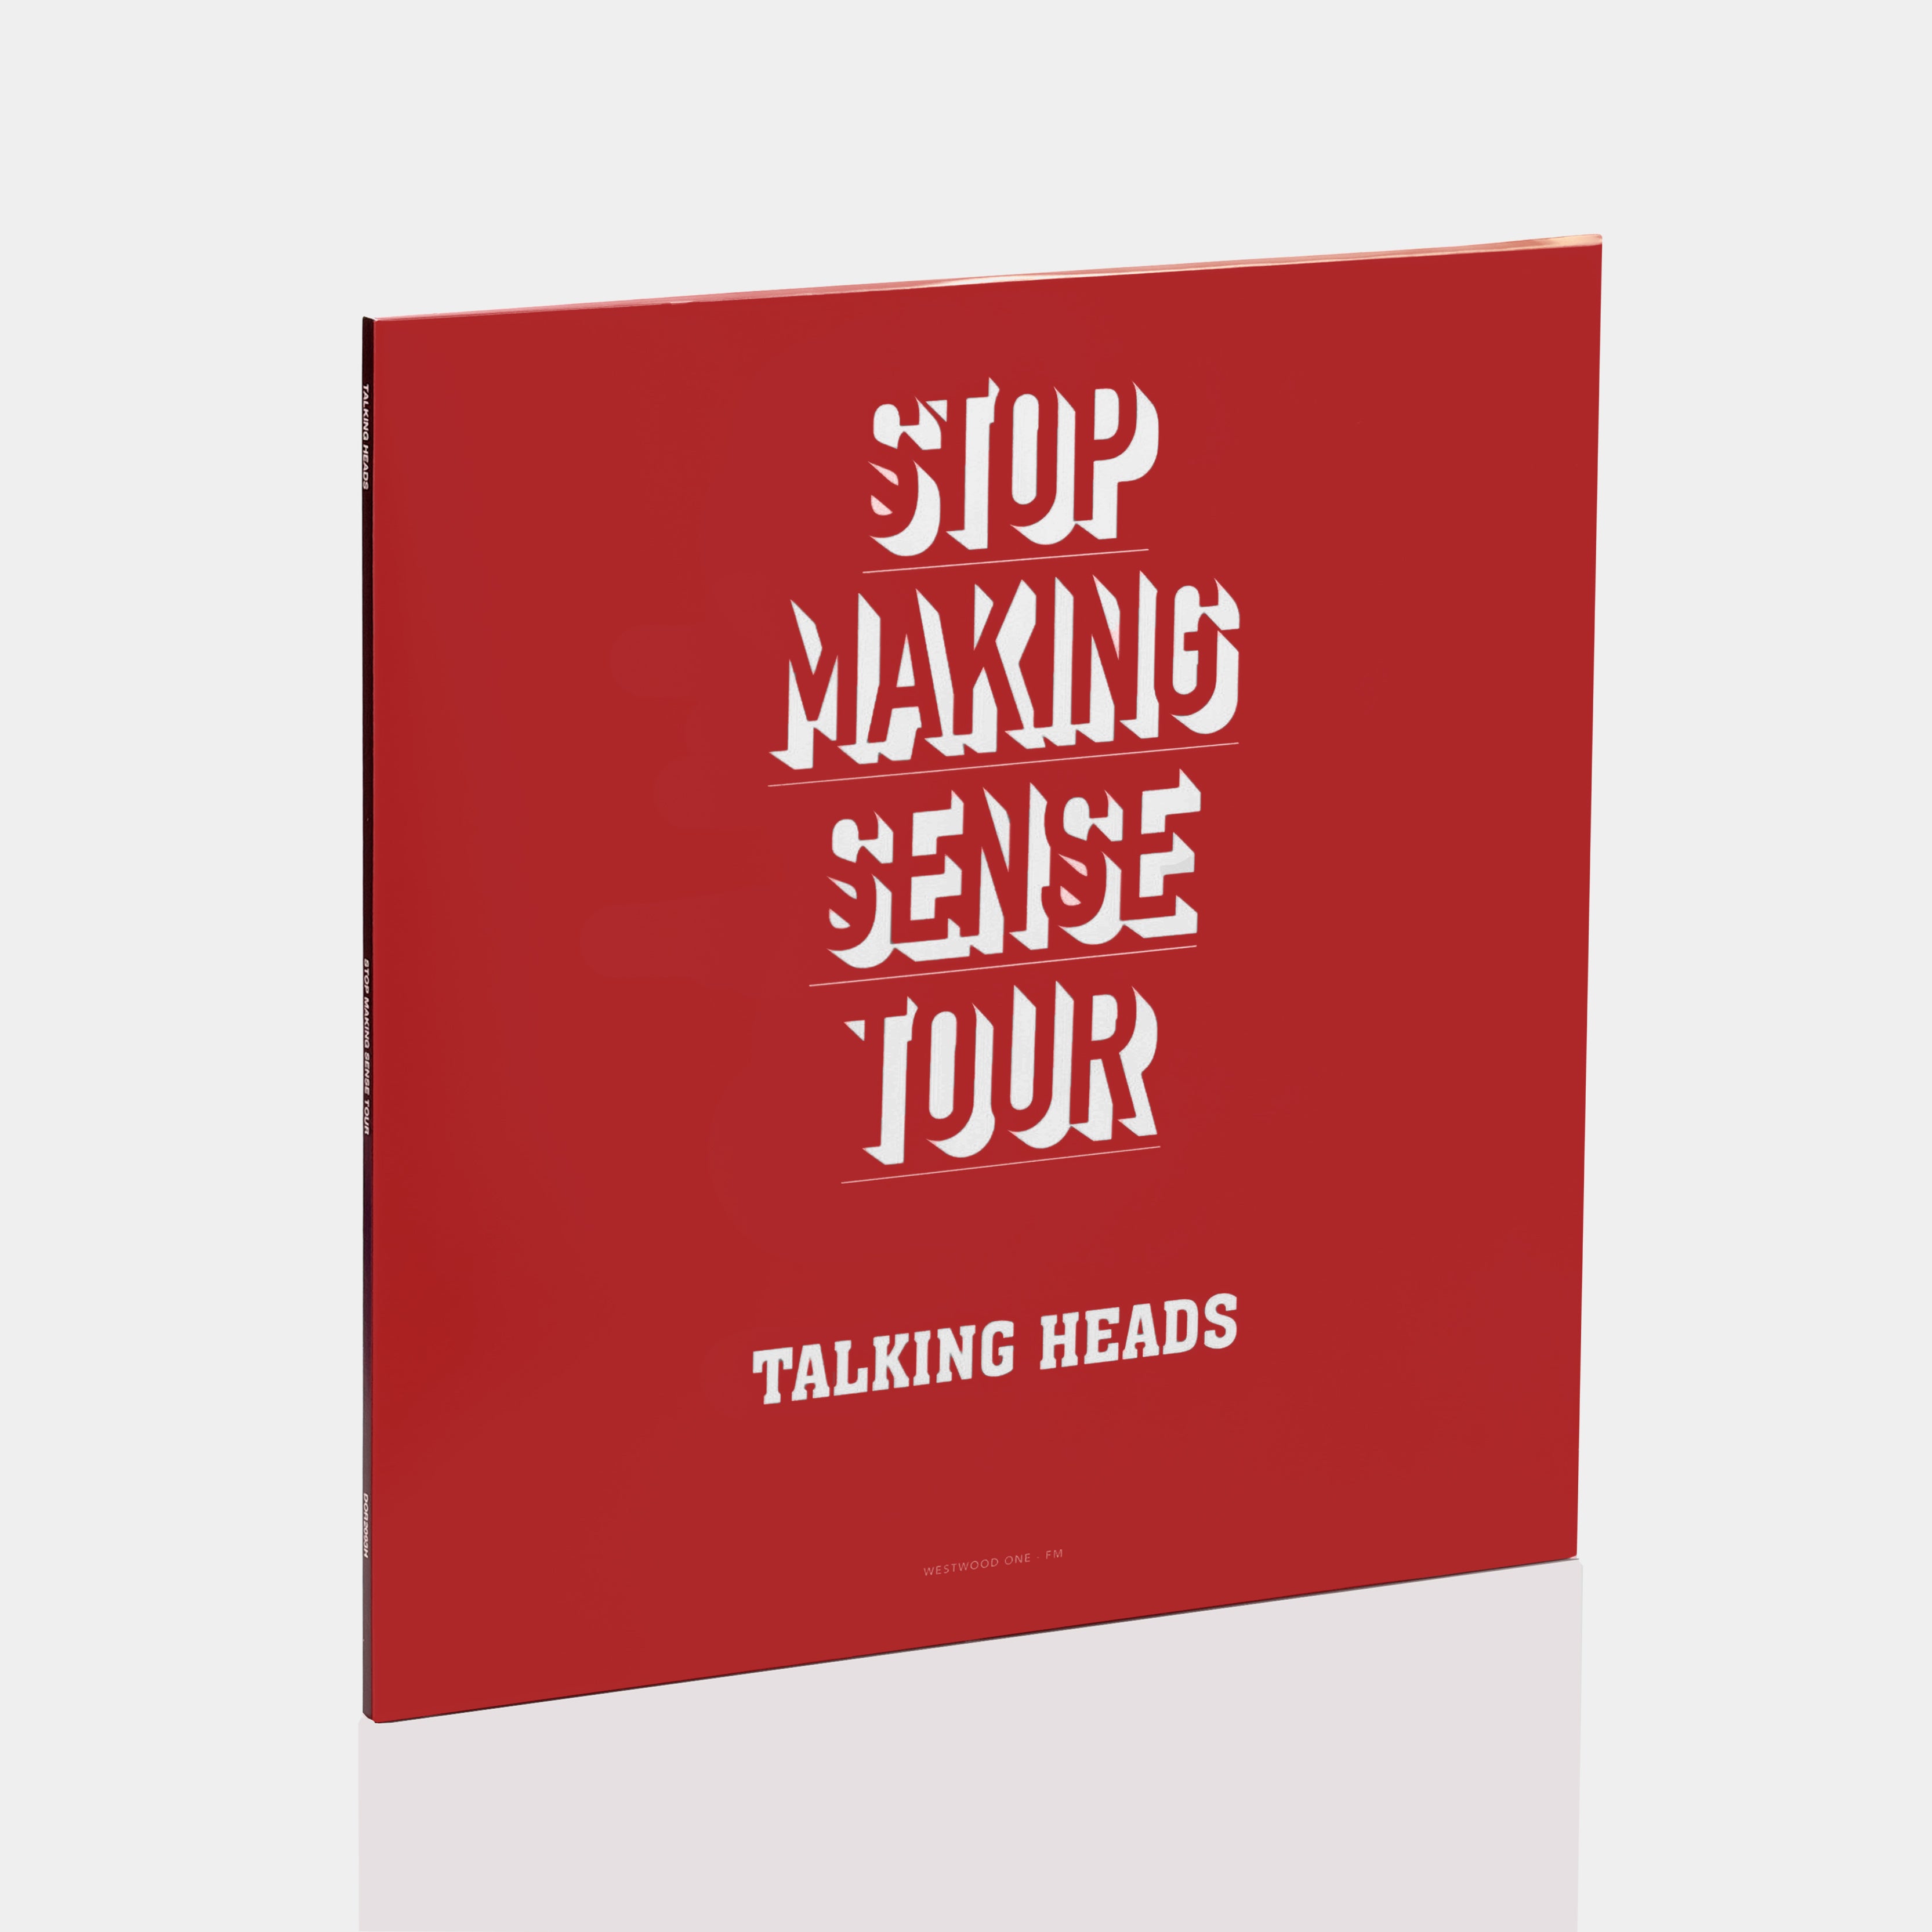 Talking Heads - Stop Making Sense Tour 2xLP Green Vinyl Record